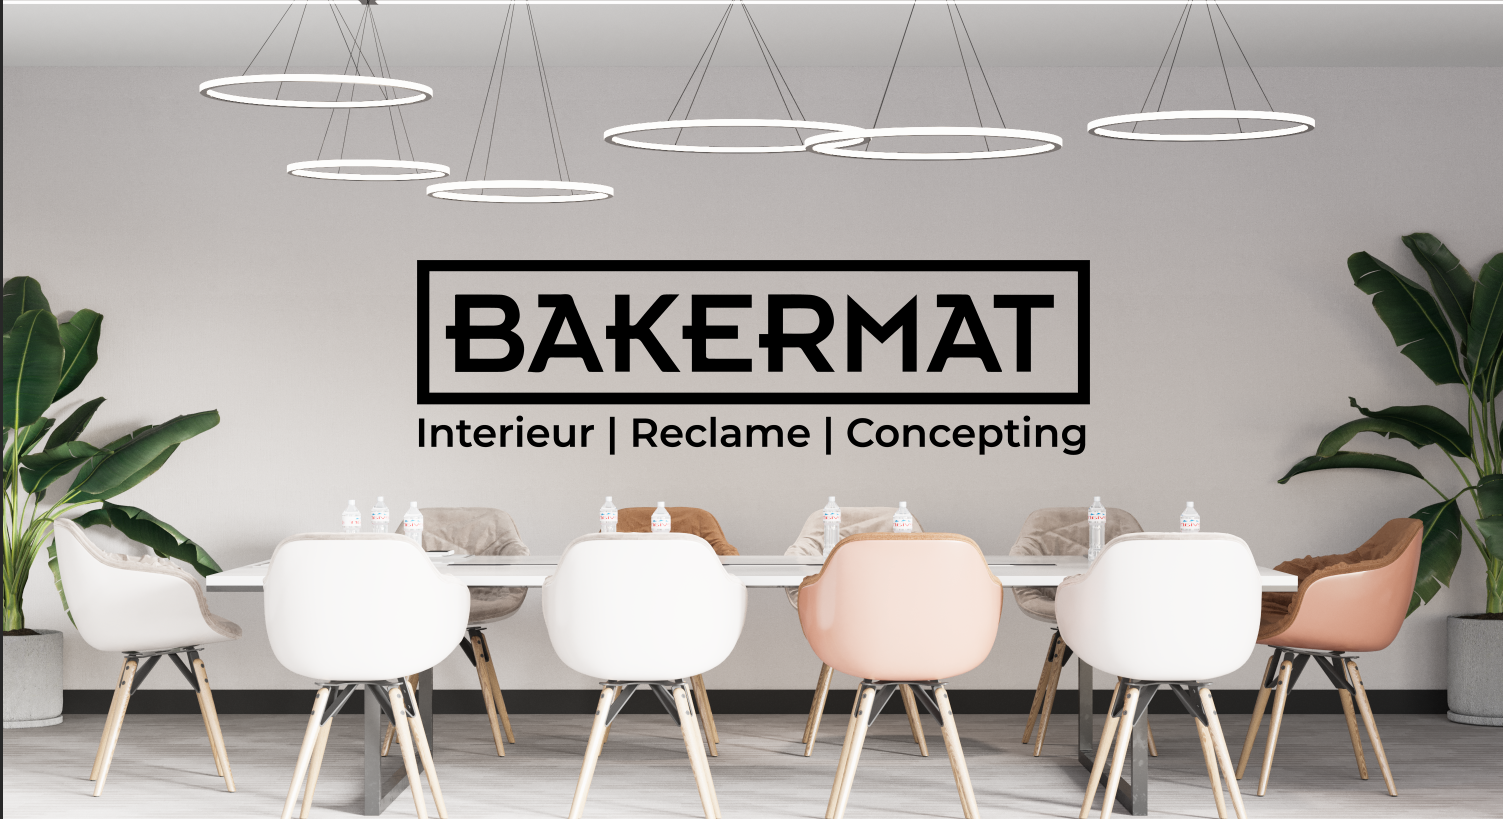 bakermat, Bakermat | Interieur | Reclame | Concepting, Bakermatshop